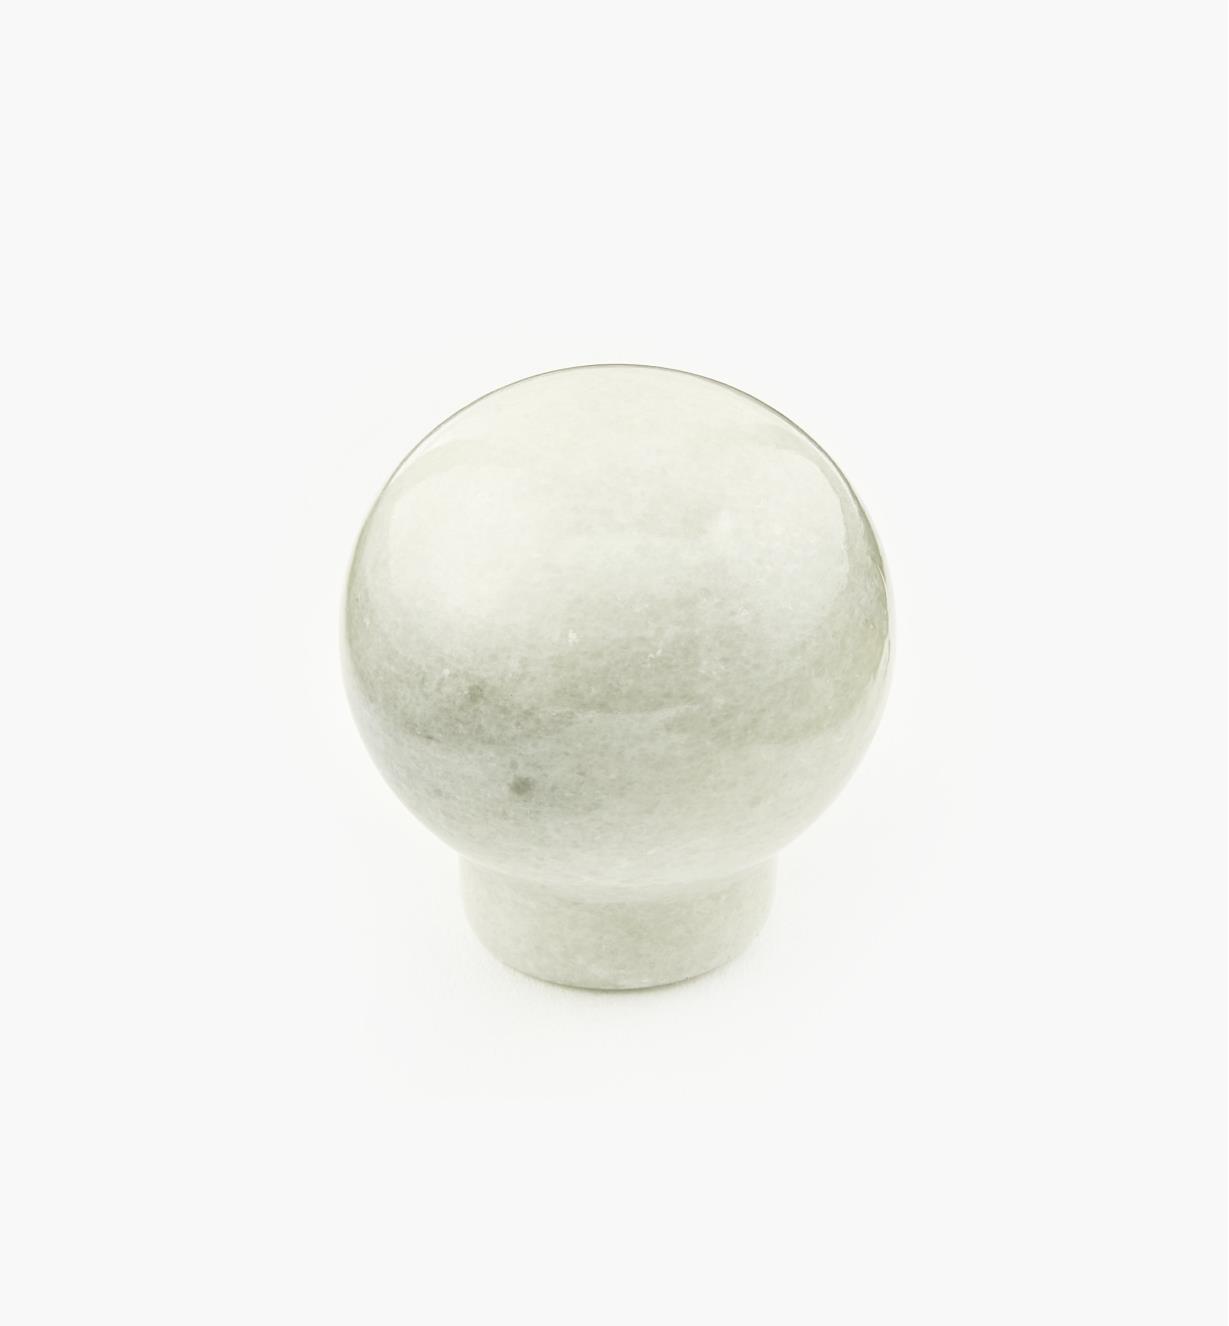 00W4014 - White Marble Knob, 33.5mm x 35.5mm